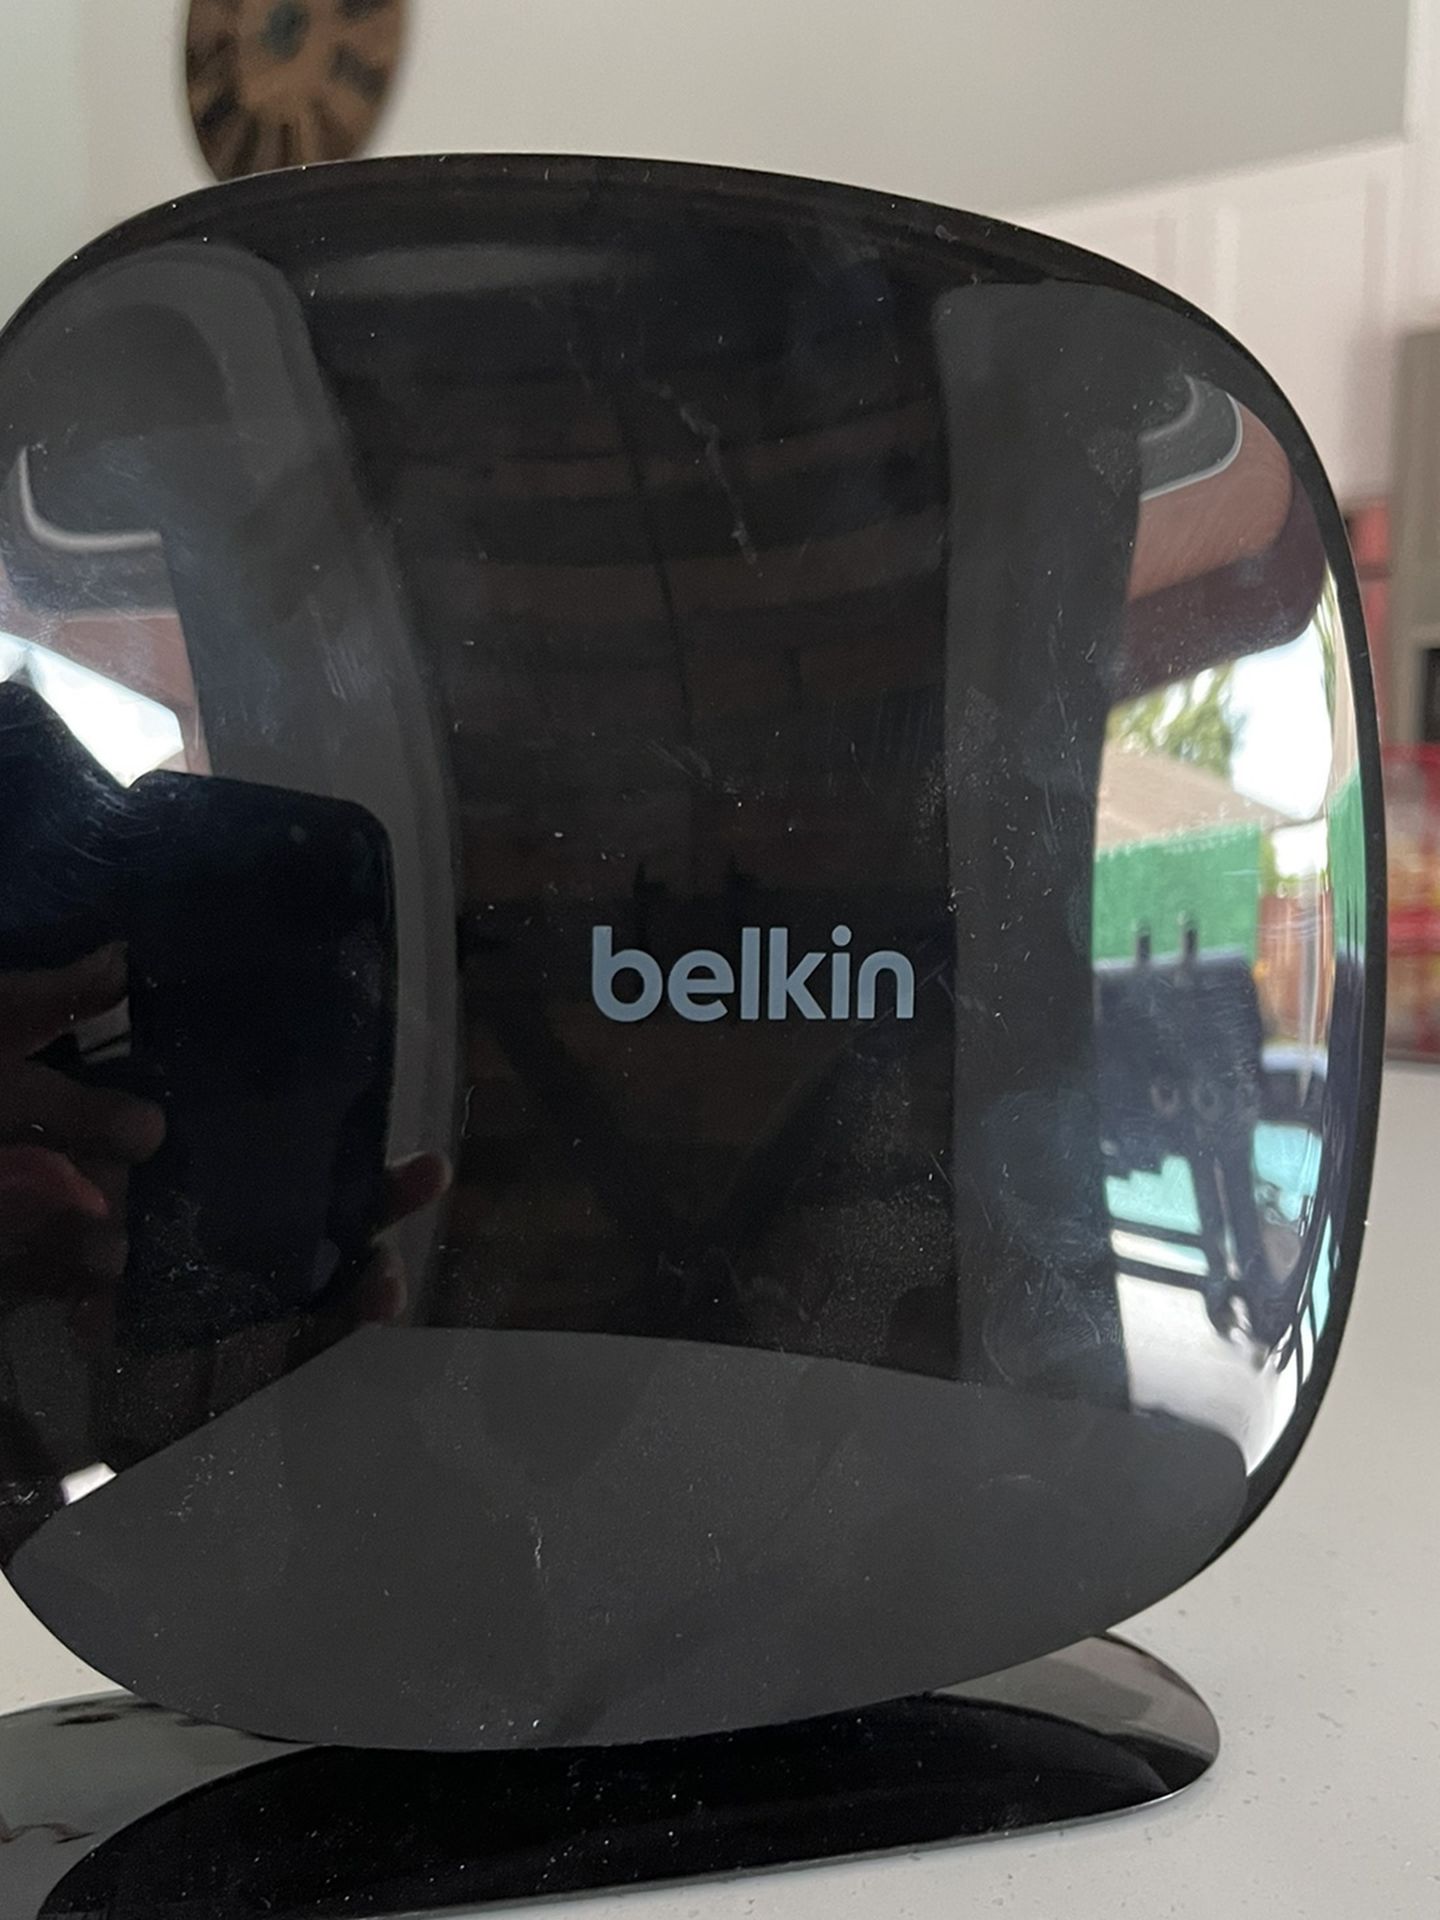 Belkin AC1200 Dual Band Wifi Router